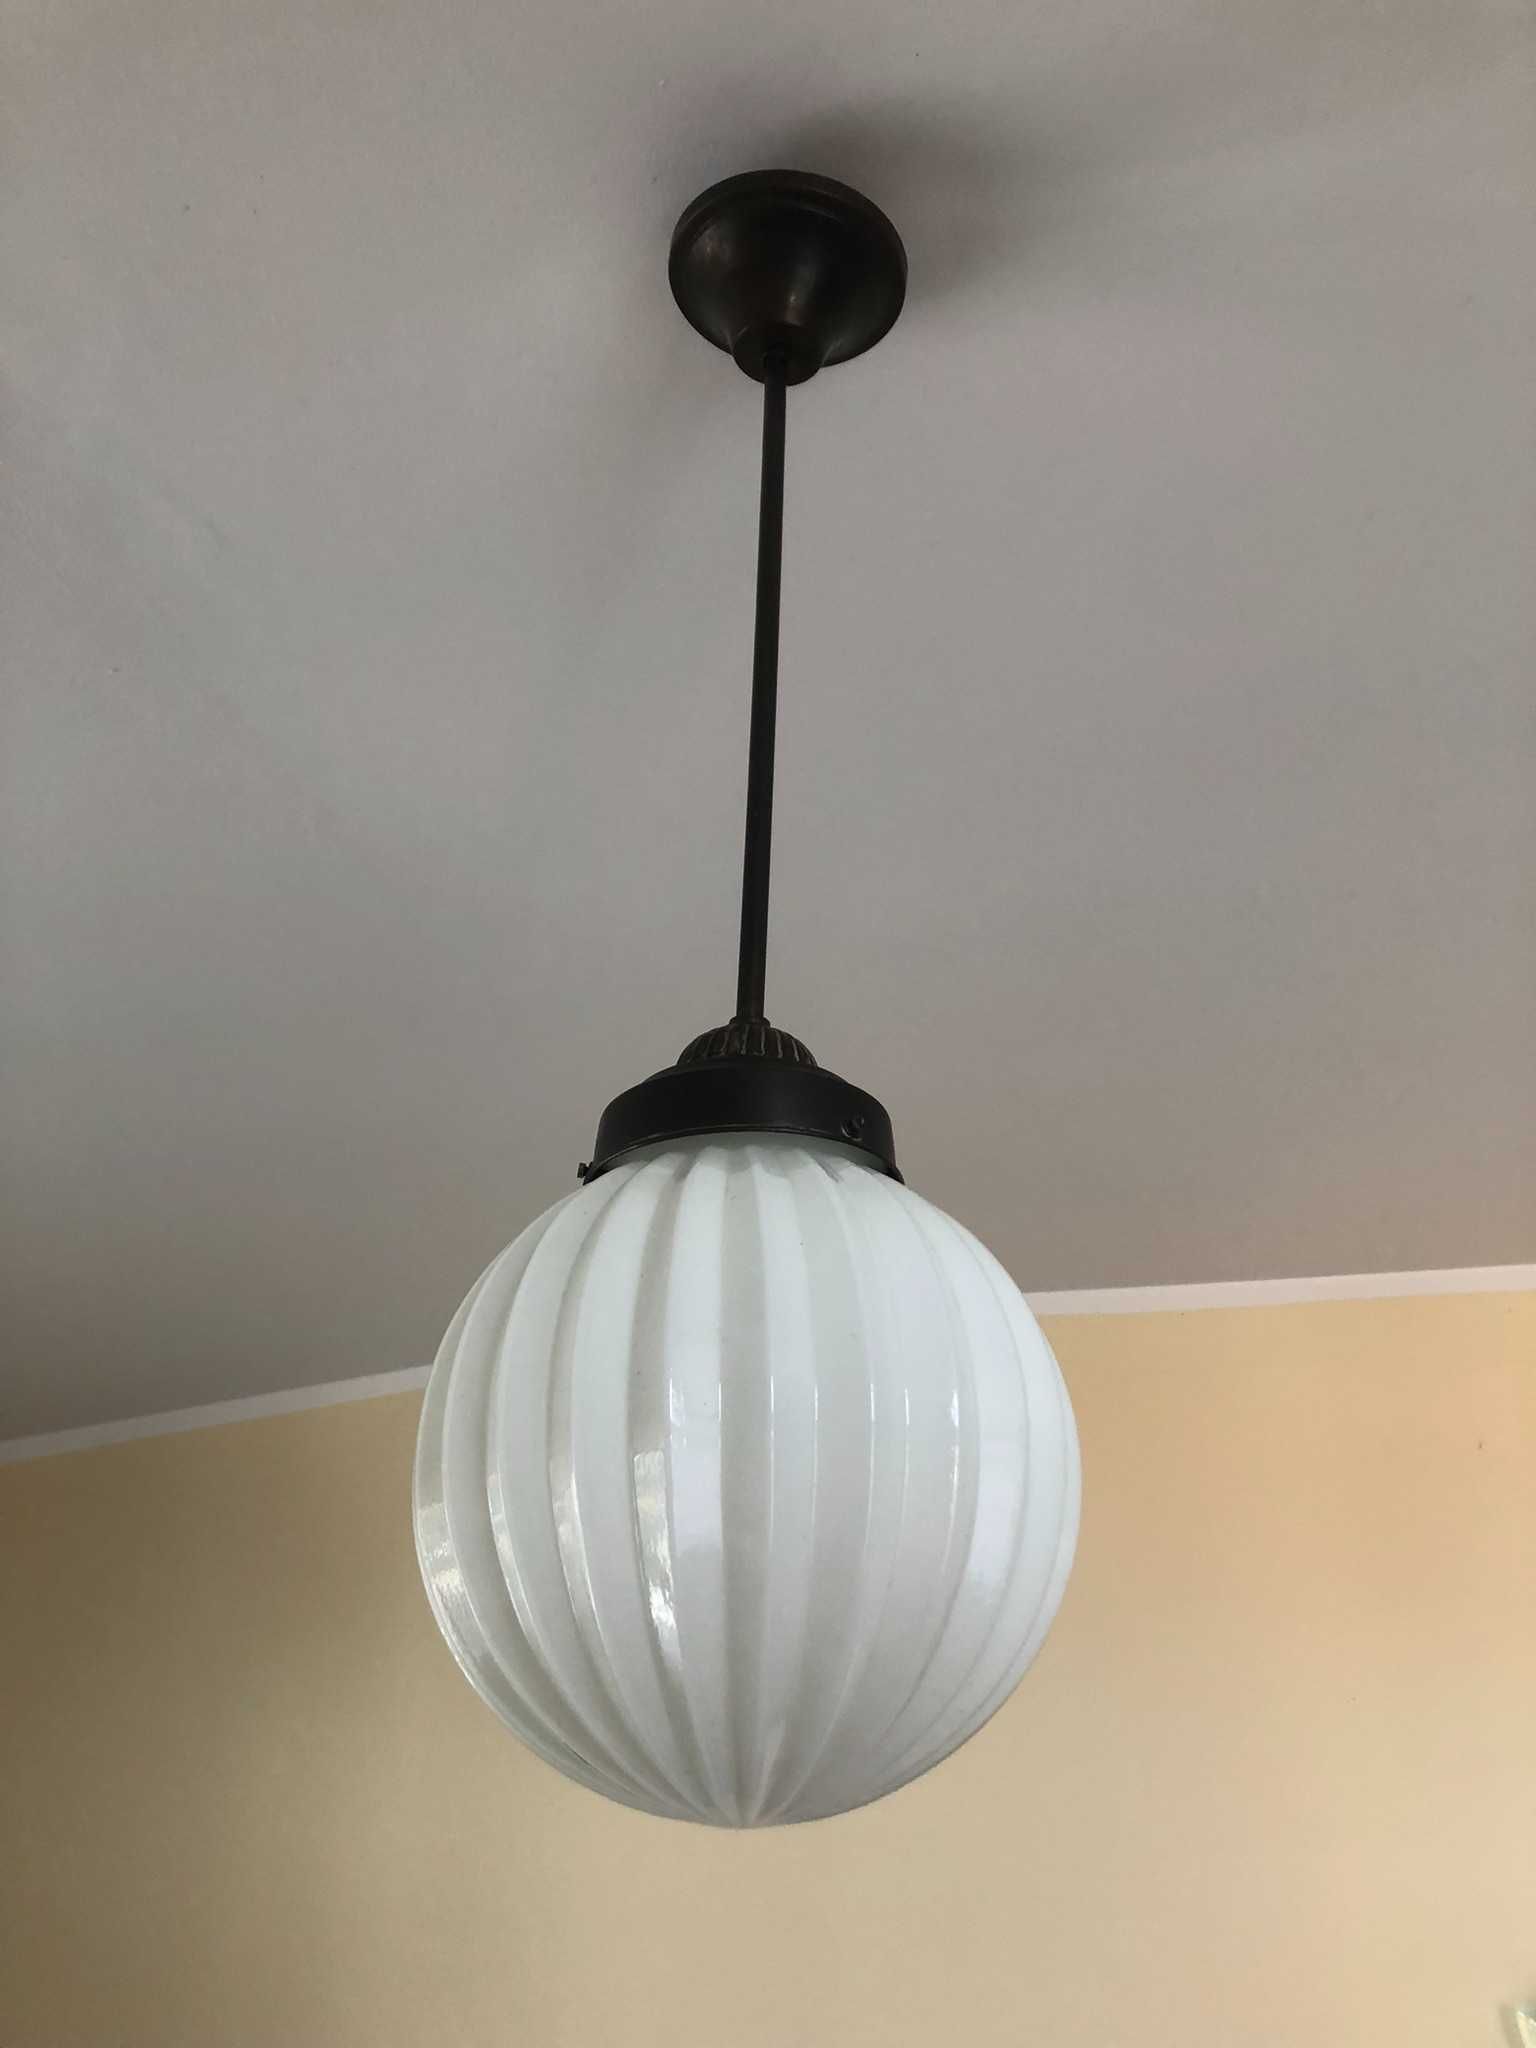 Stara lampa mosiężny żyrandol biała kula